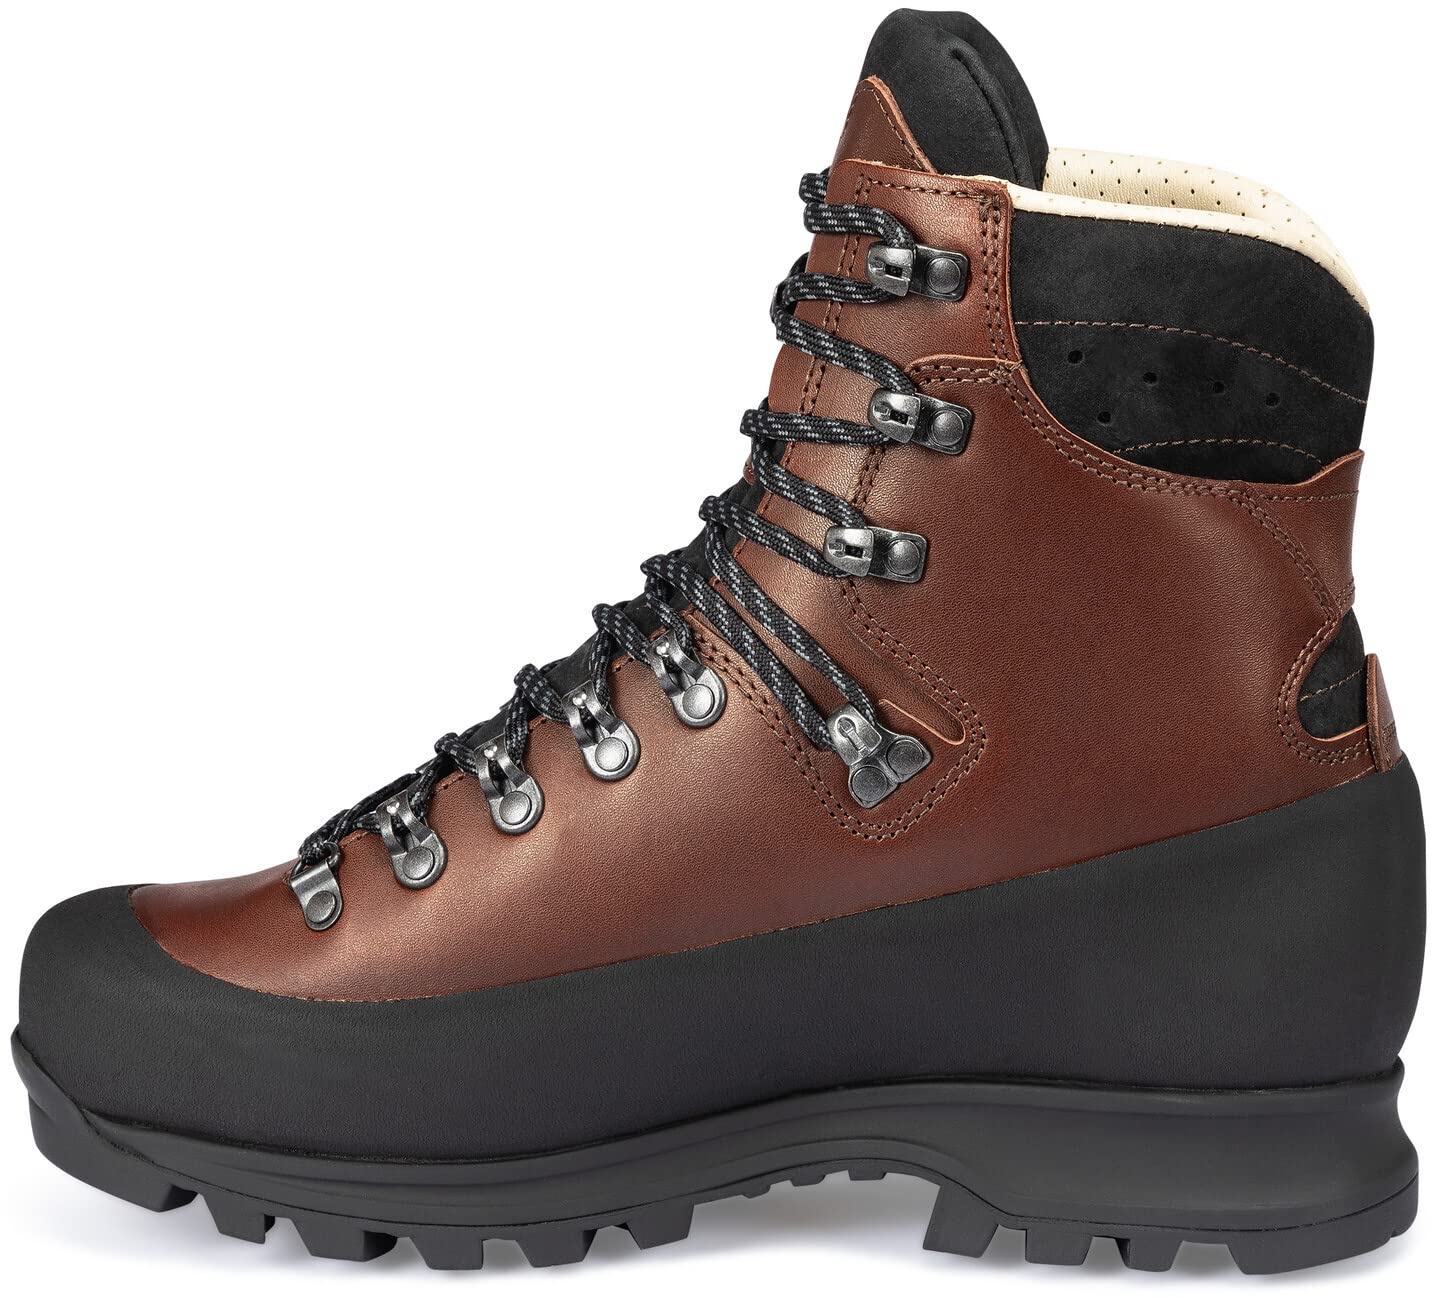 Hanwag Alaska Pro Wide GTX Schuhe Herren braun/schwarz - 42 EU Weit